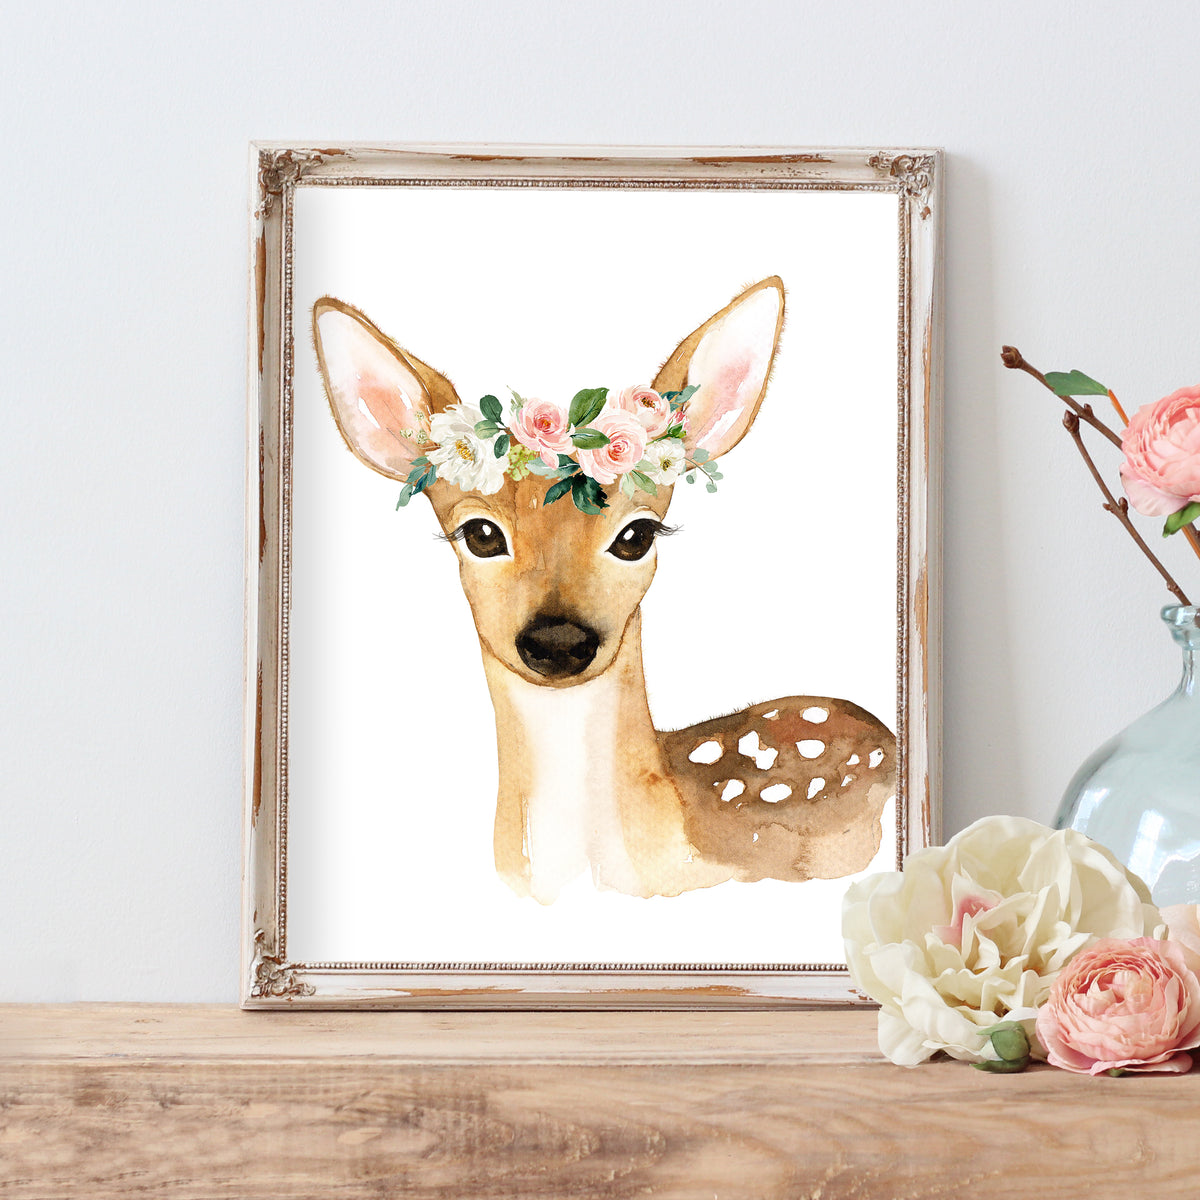 Woodland Nursery Art Girl - Watercolor Deer with Blush Pink Flowers